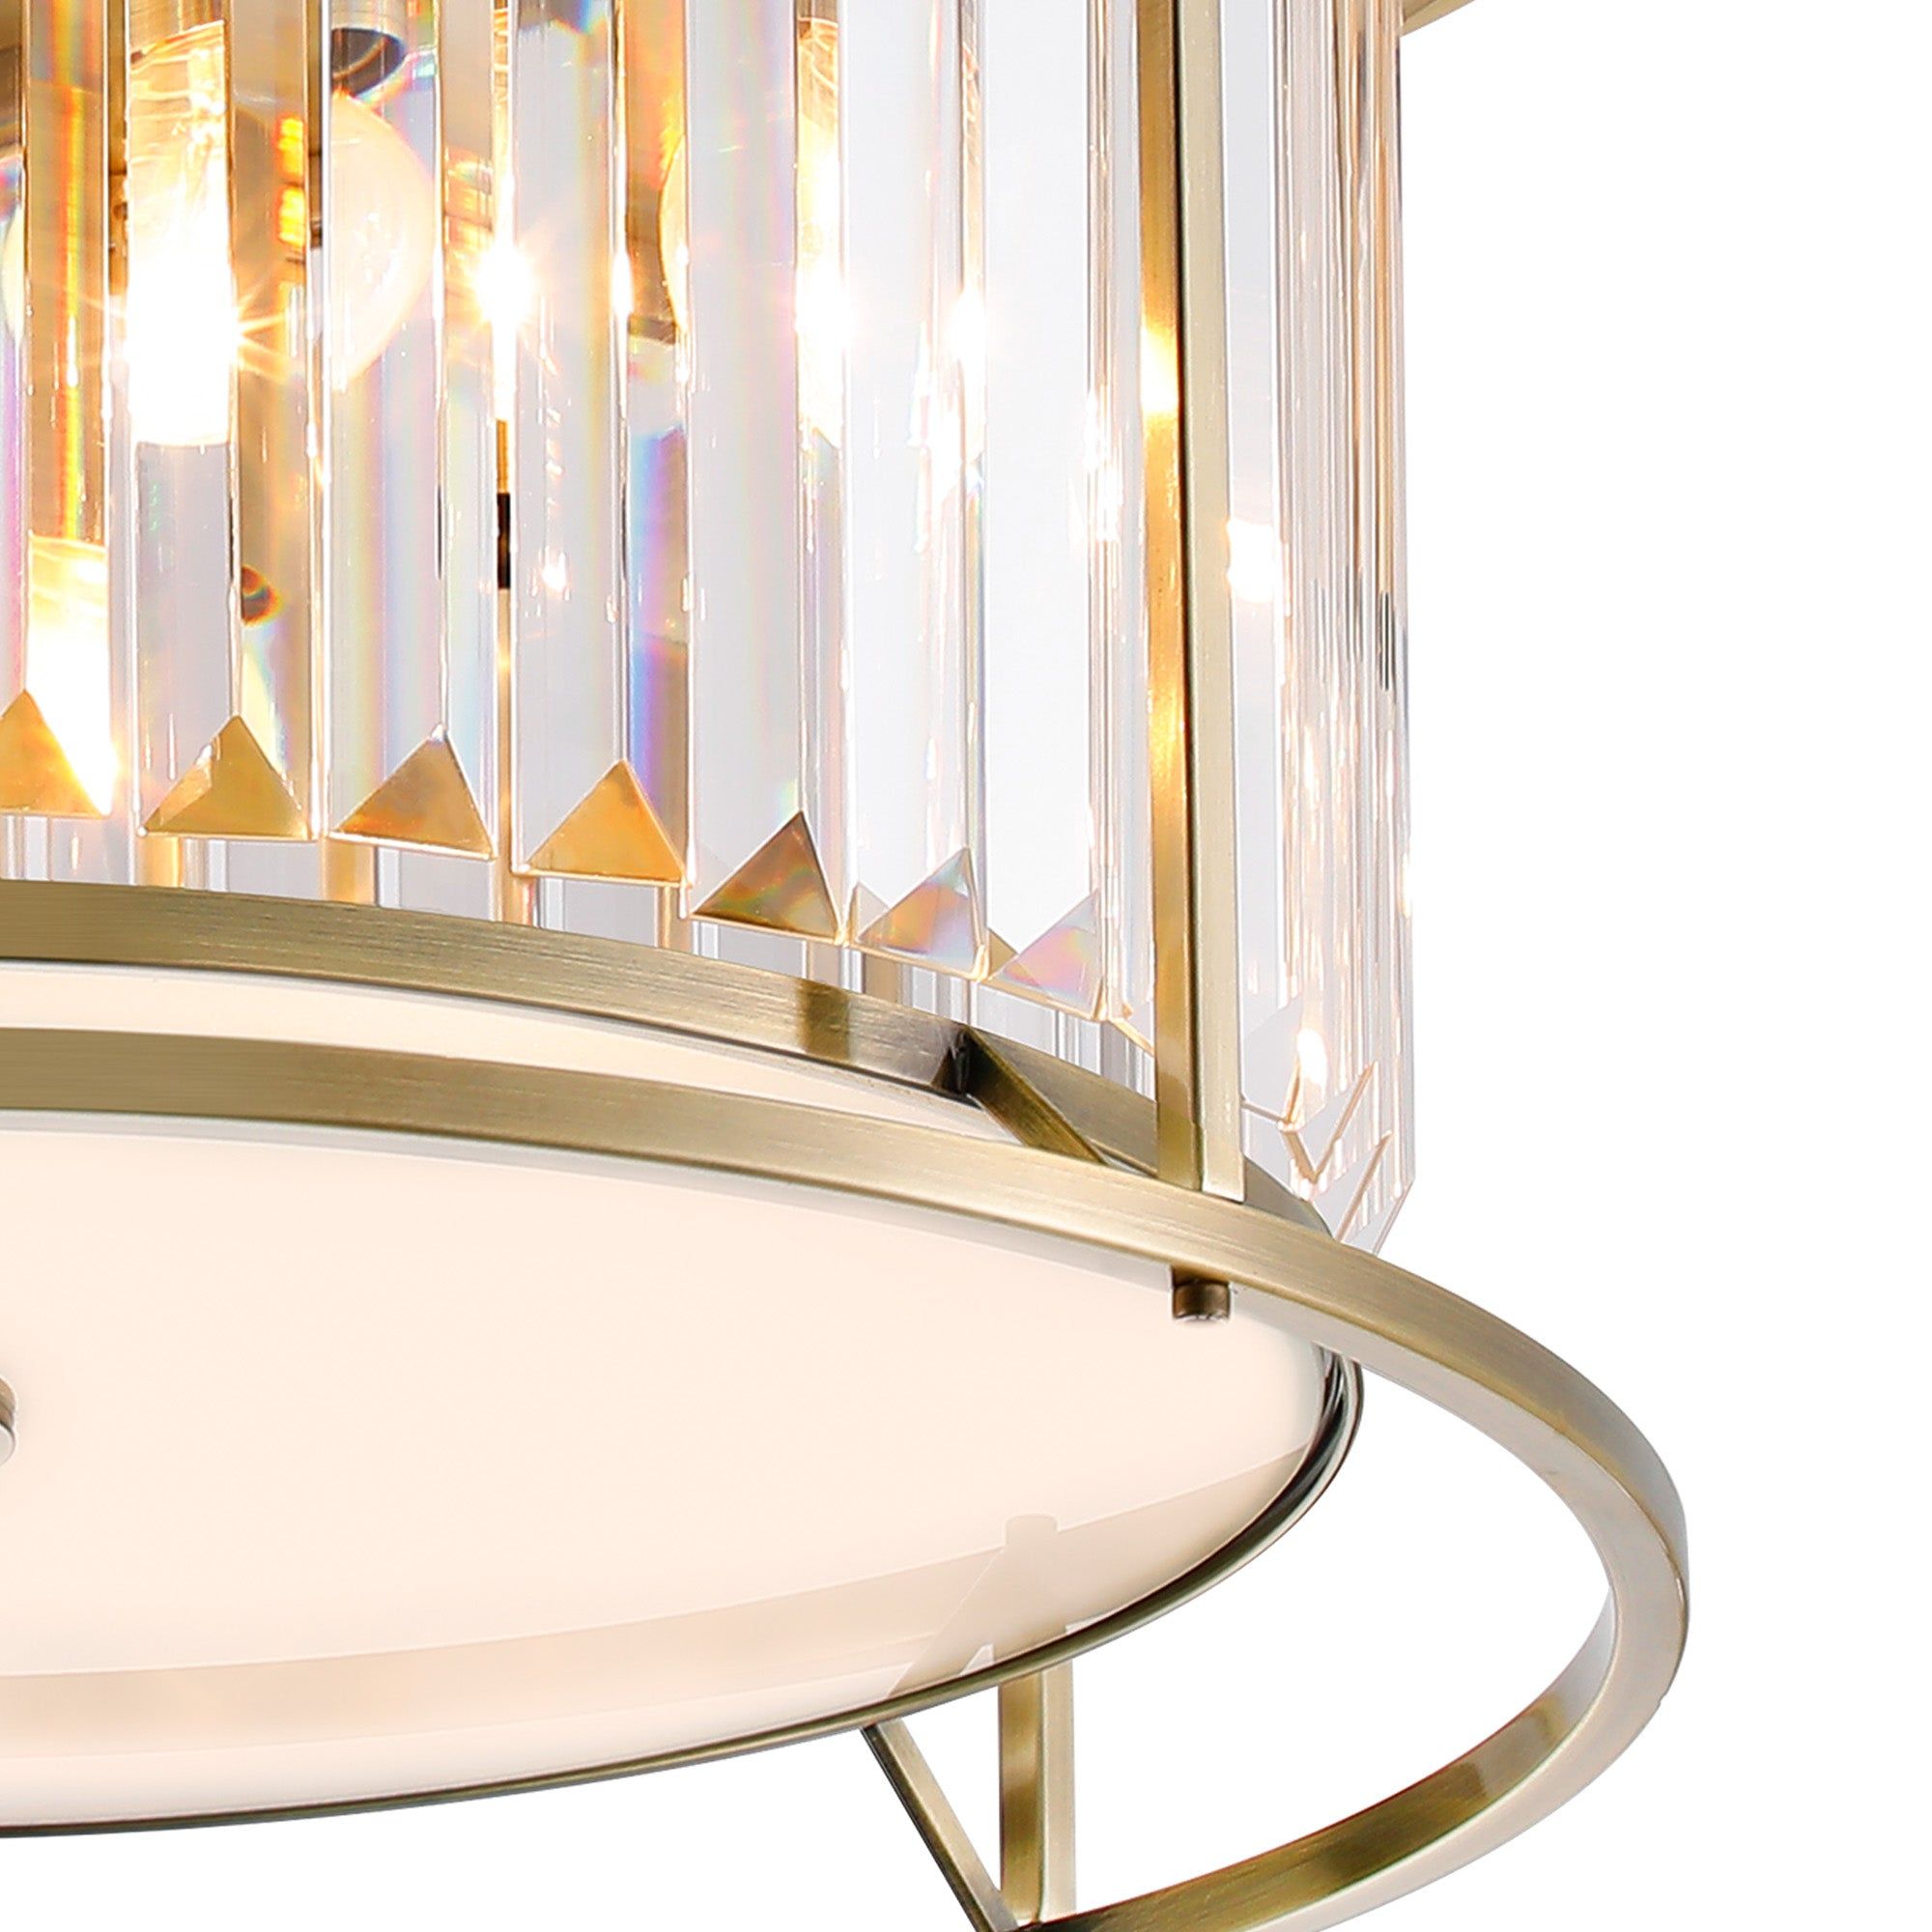 Belle Flush Ceiling Light 4Lt x E27 - Antique Brass & Clear IP20